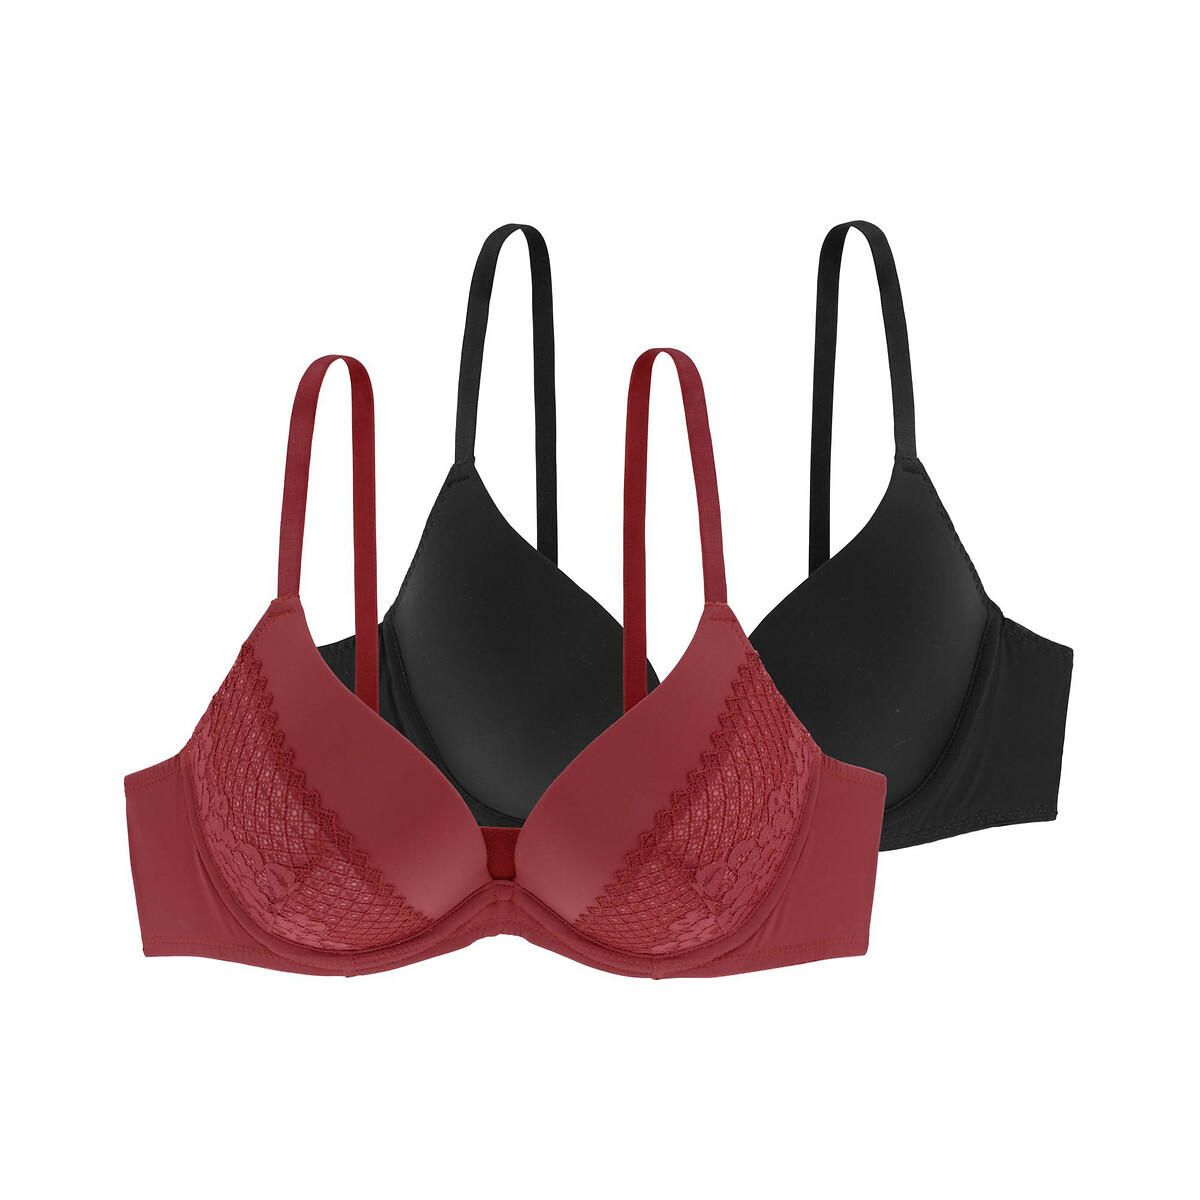 Pack of 2 kelsea recycled push-up bras, red/black, Dorina